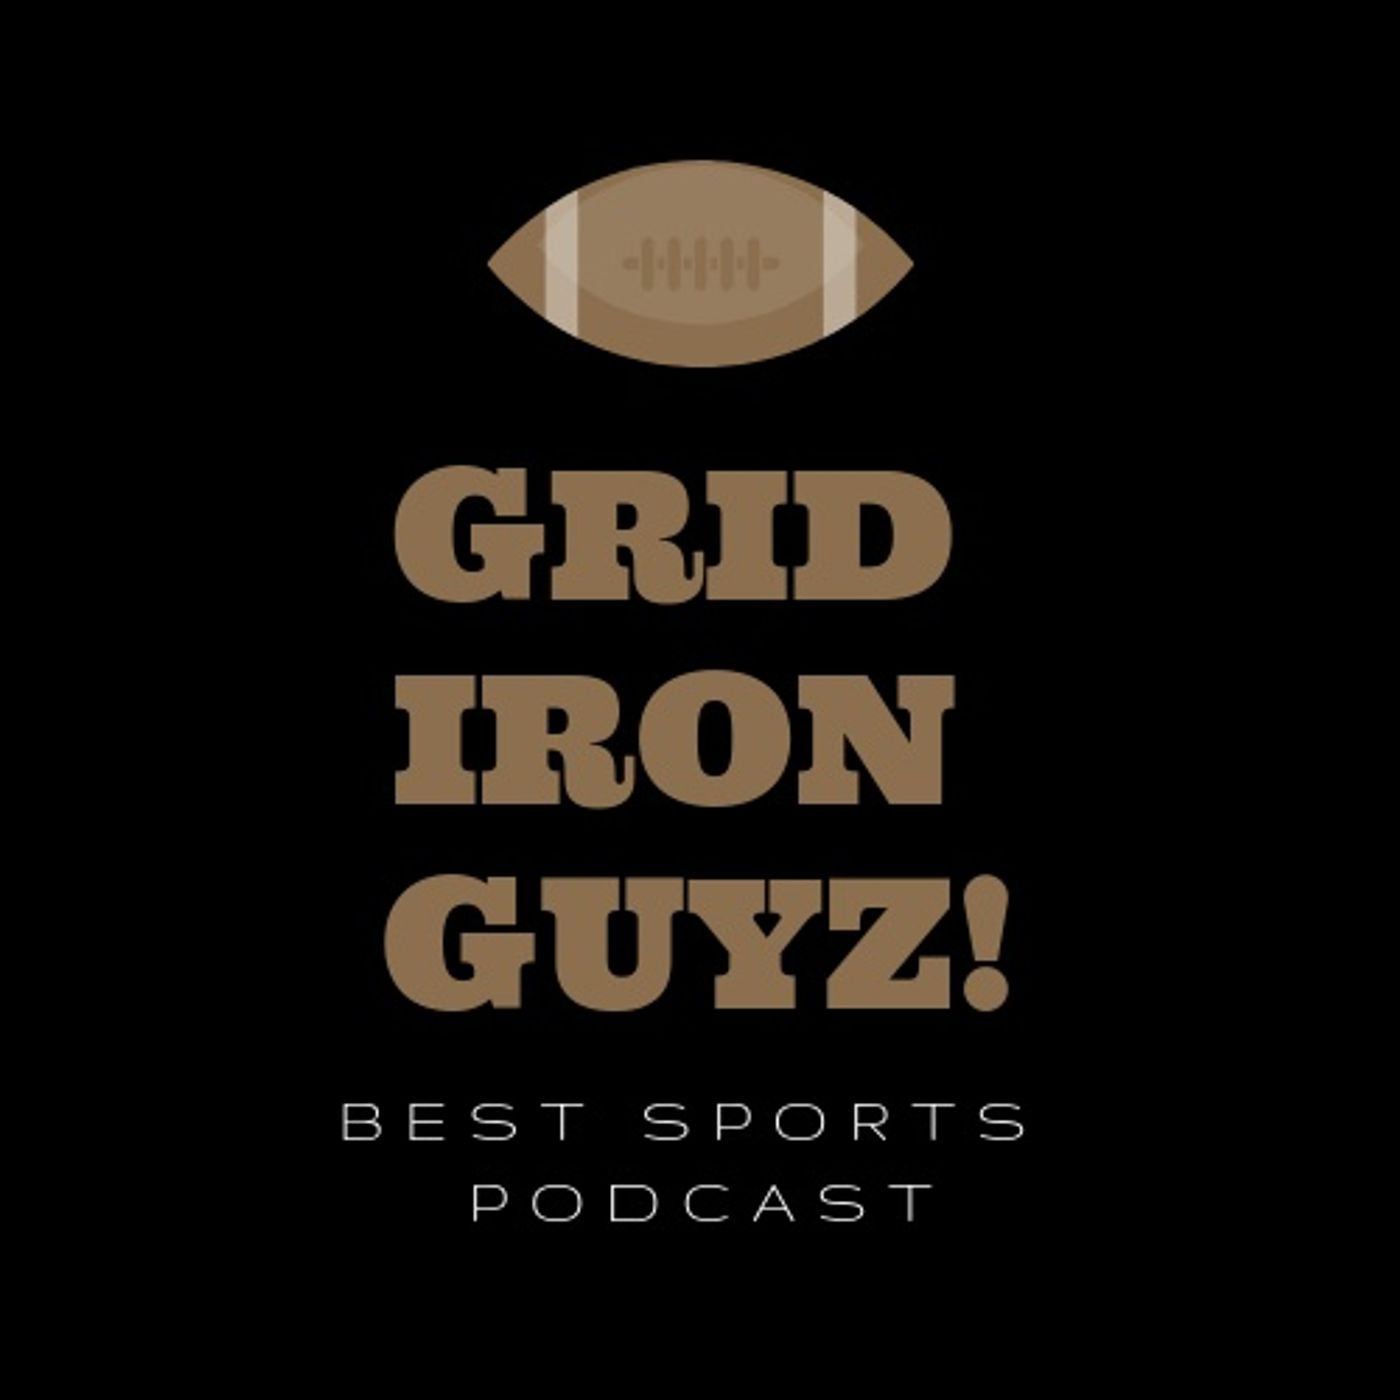 Grid Iron Guyz